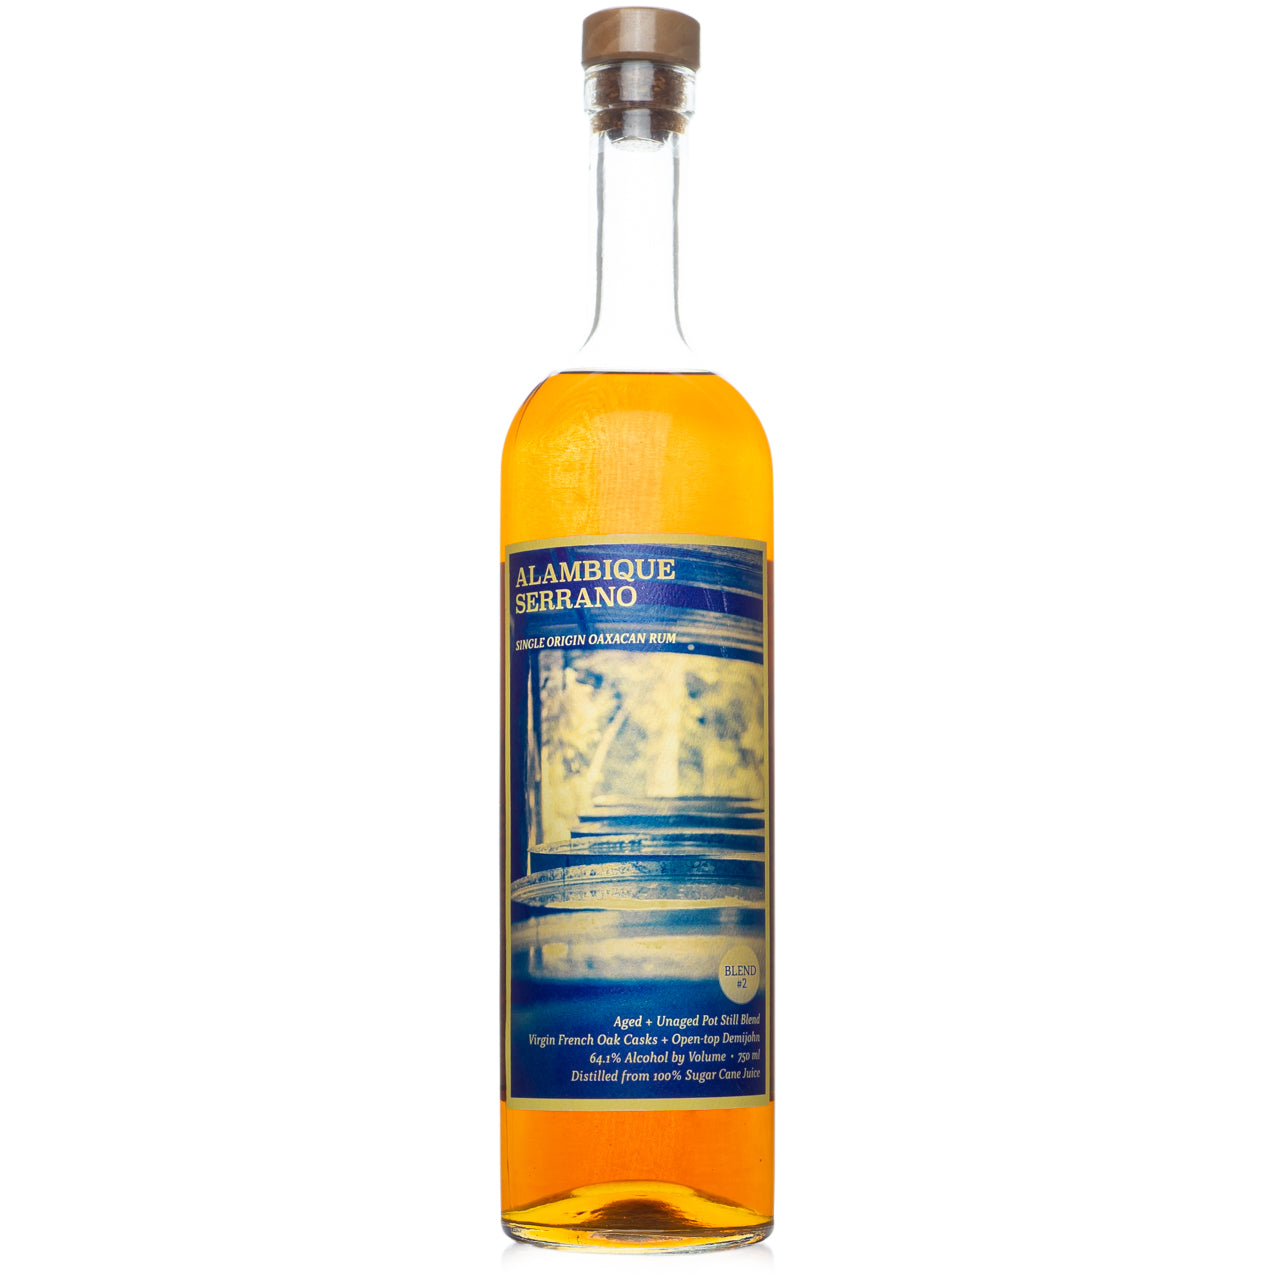 Alambique Serrano Blend #2 Single Origin Oaxacan Rum